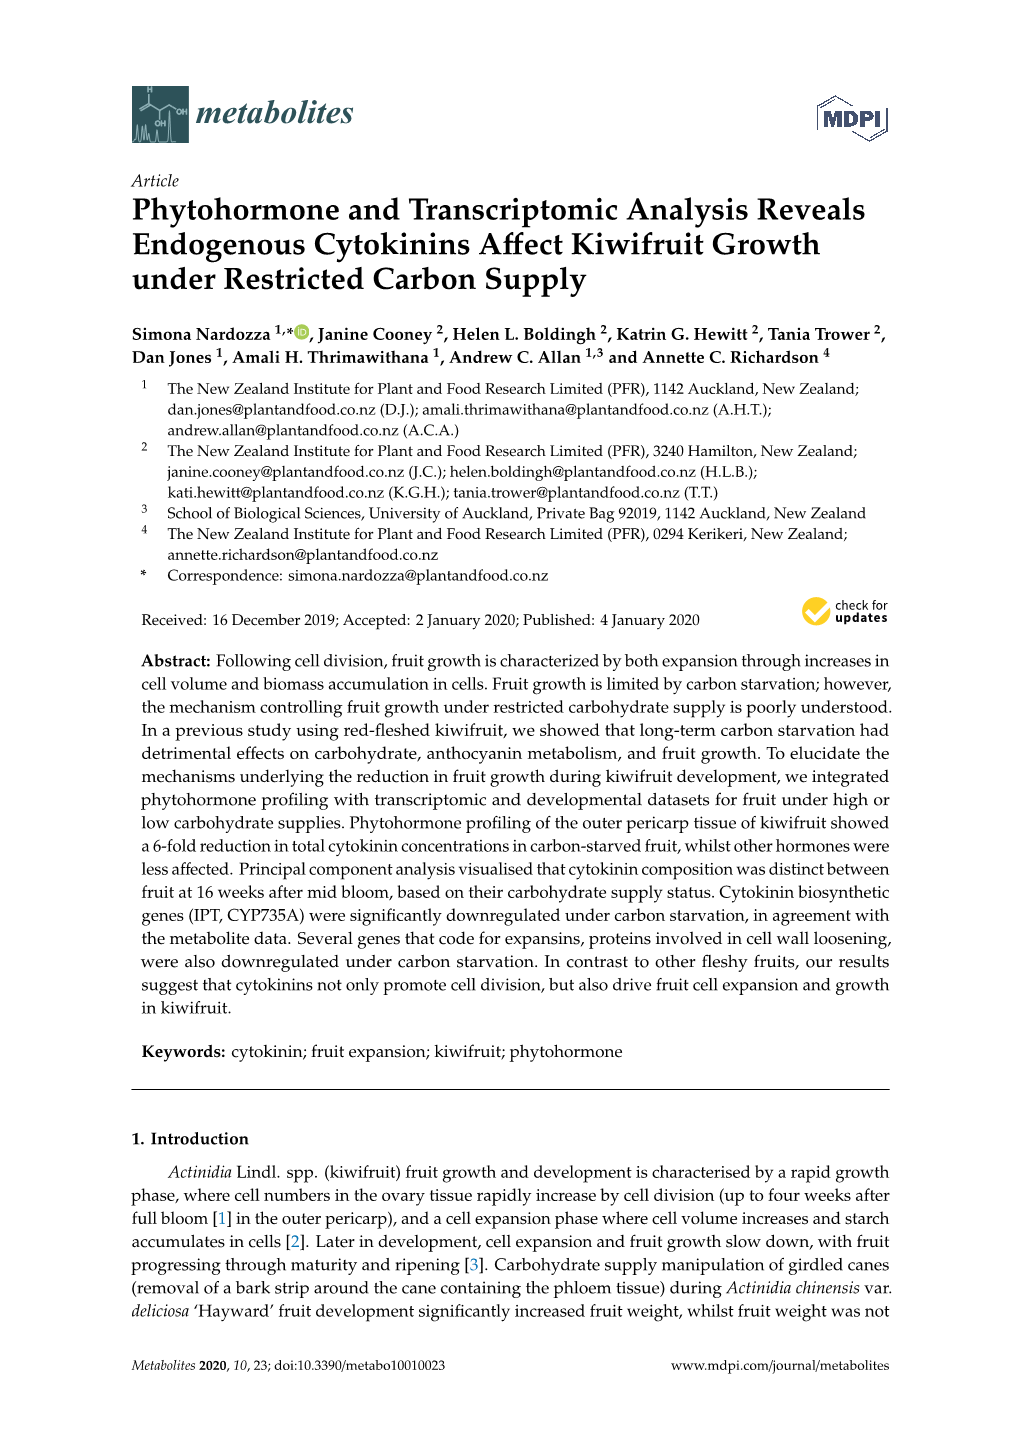 Phytohormone and Transcriptomic Analysis Reveals Endogenous Cytokinins Aﬀect Kiwifruit Growth Under Restricted Carbon Supply